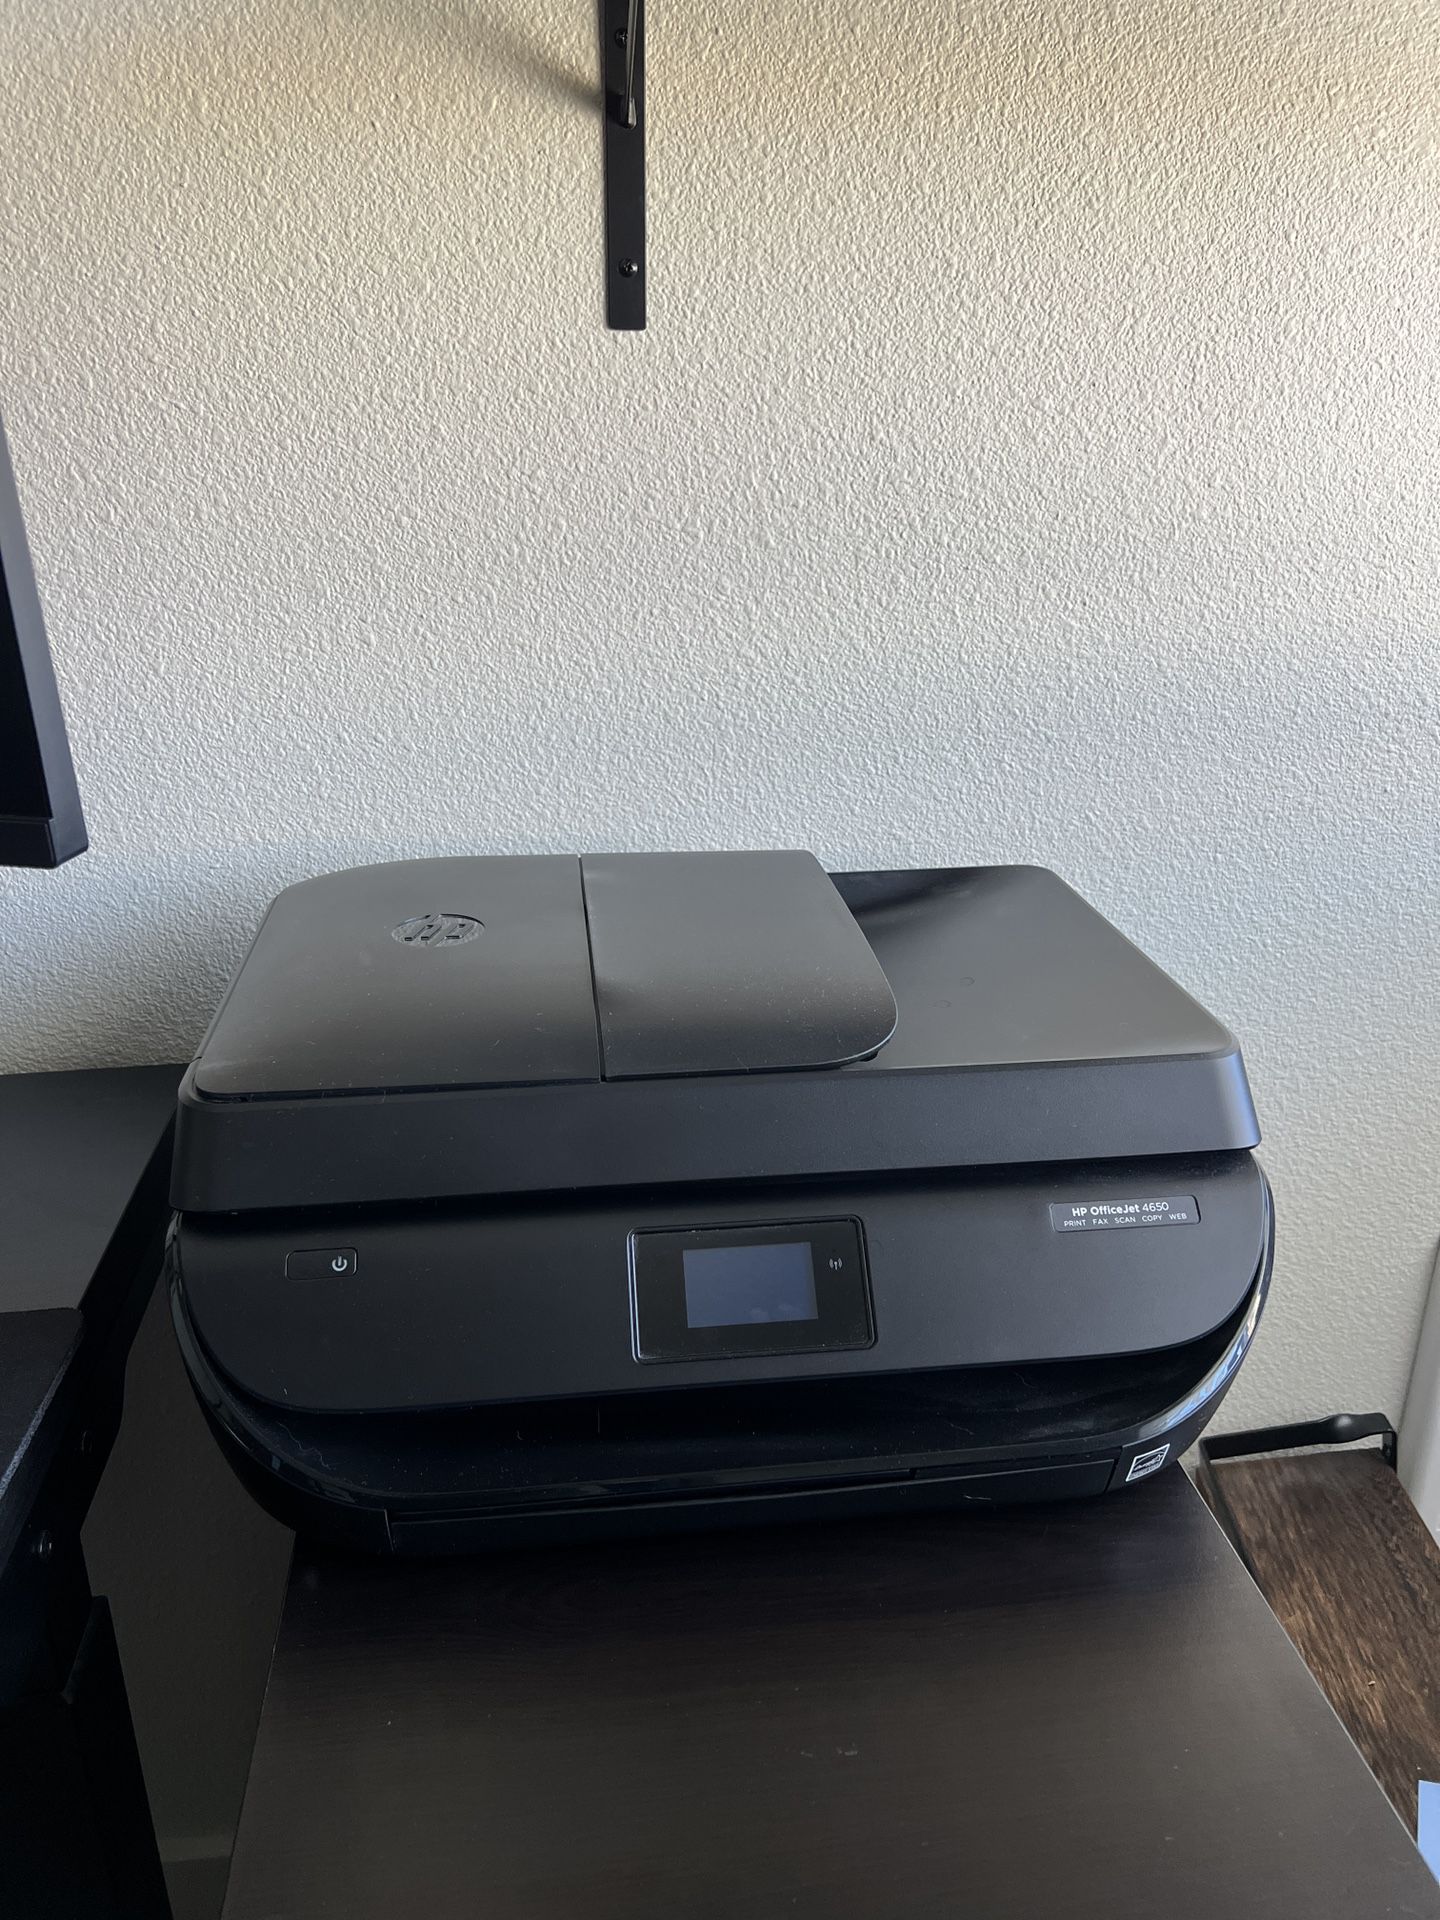 HP Office jet Printer